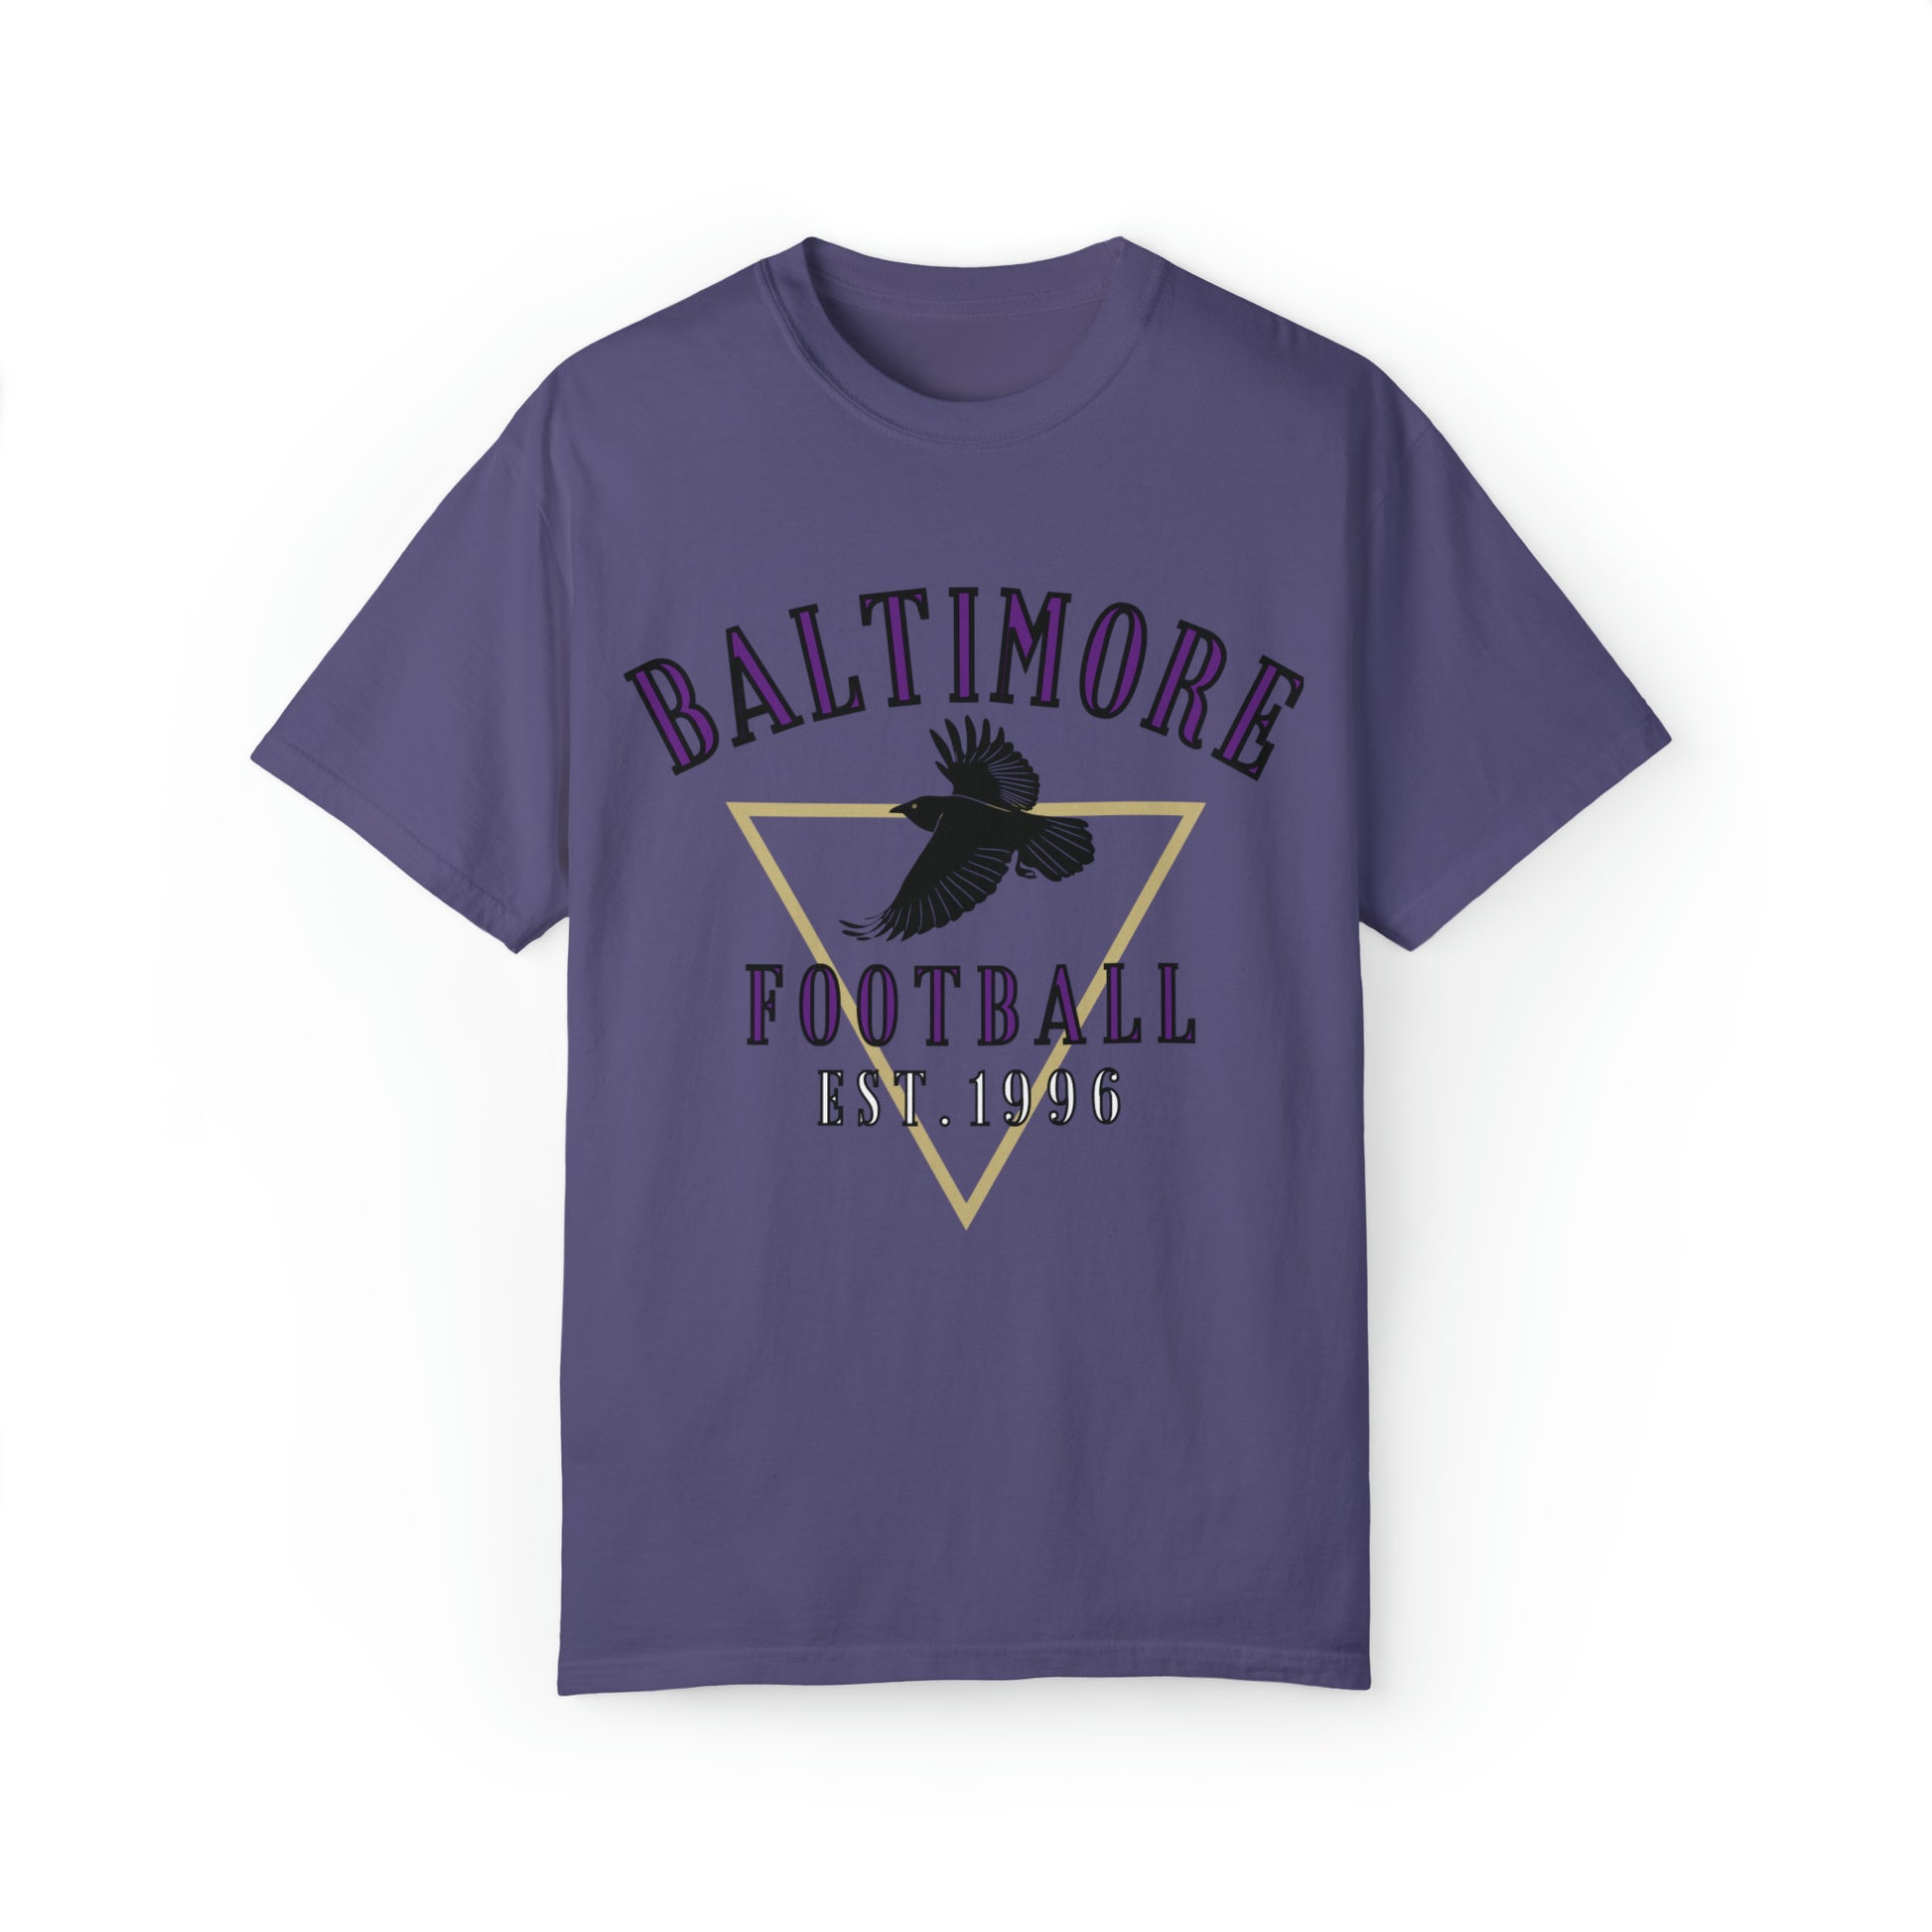 Baltimore Ravens T-Shirt  - Vintage Short Sleeve Tee - Comfort Colors Oversized Men's Women's Apparel - Design 3